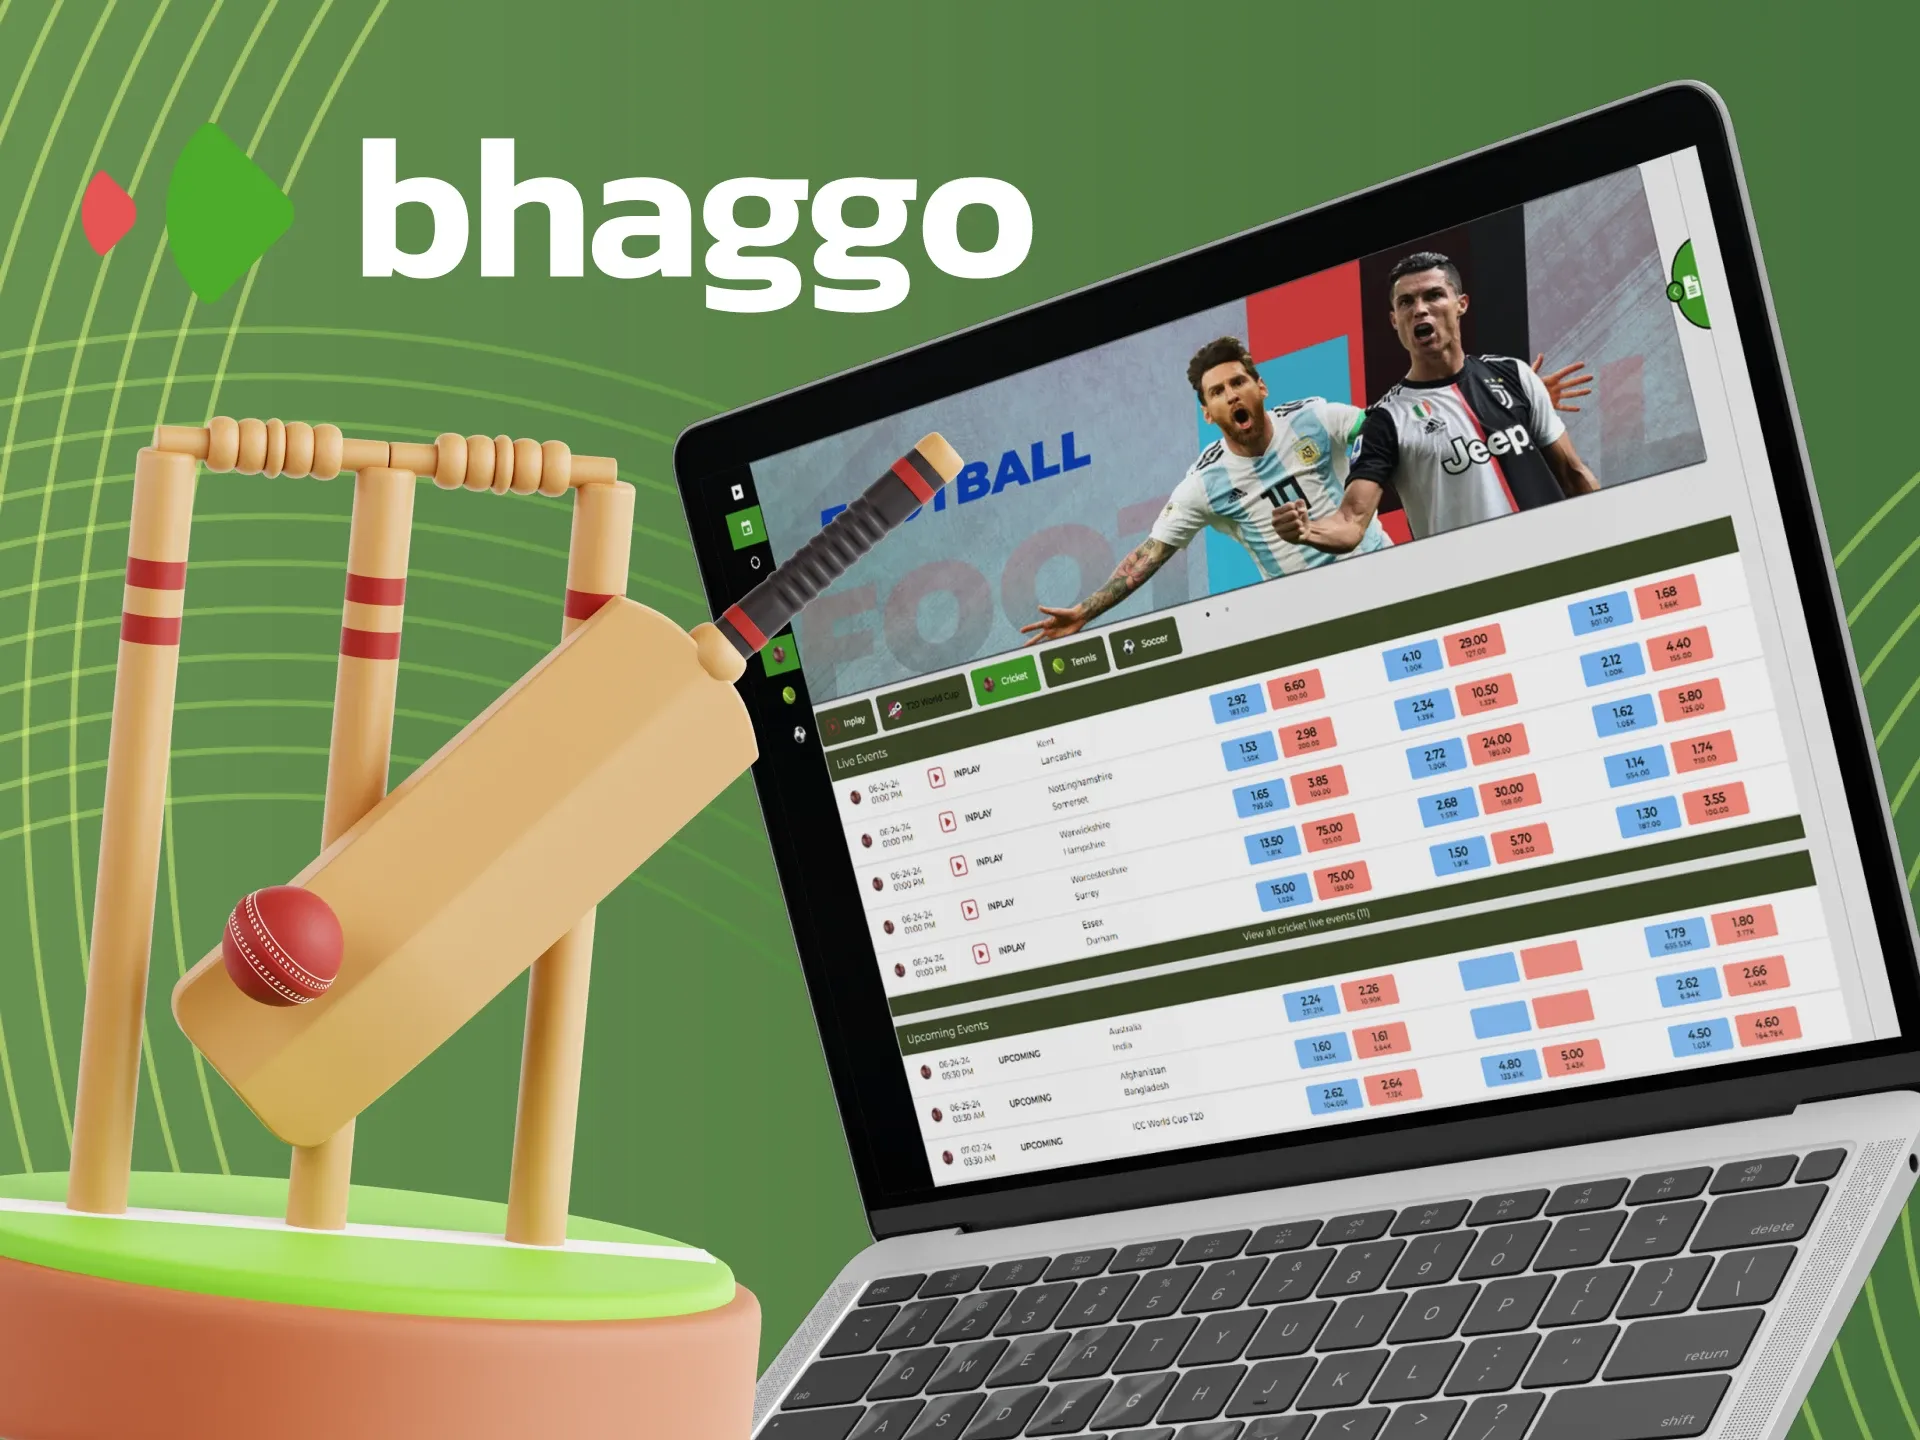 Types of cricket bets at Bhaggo.